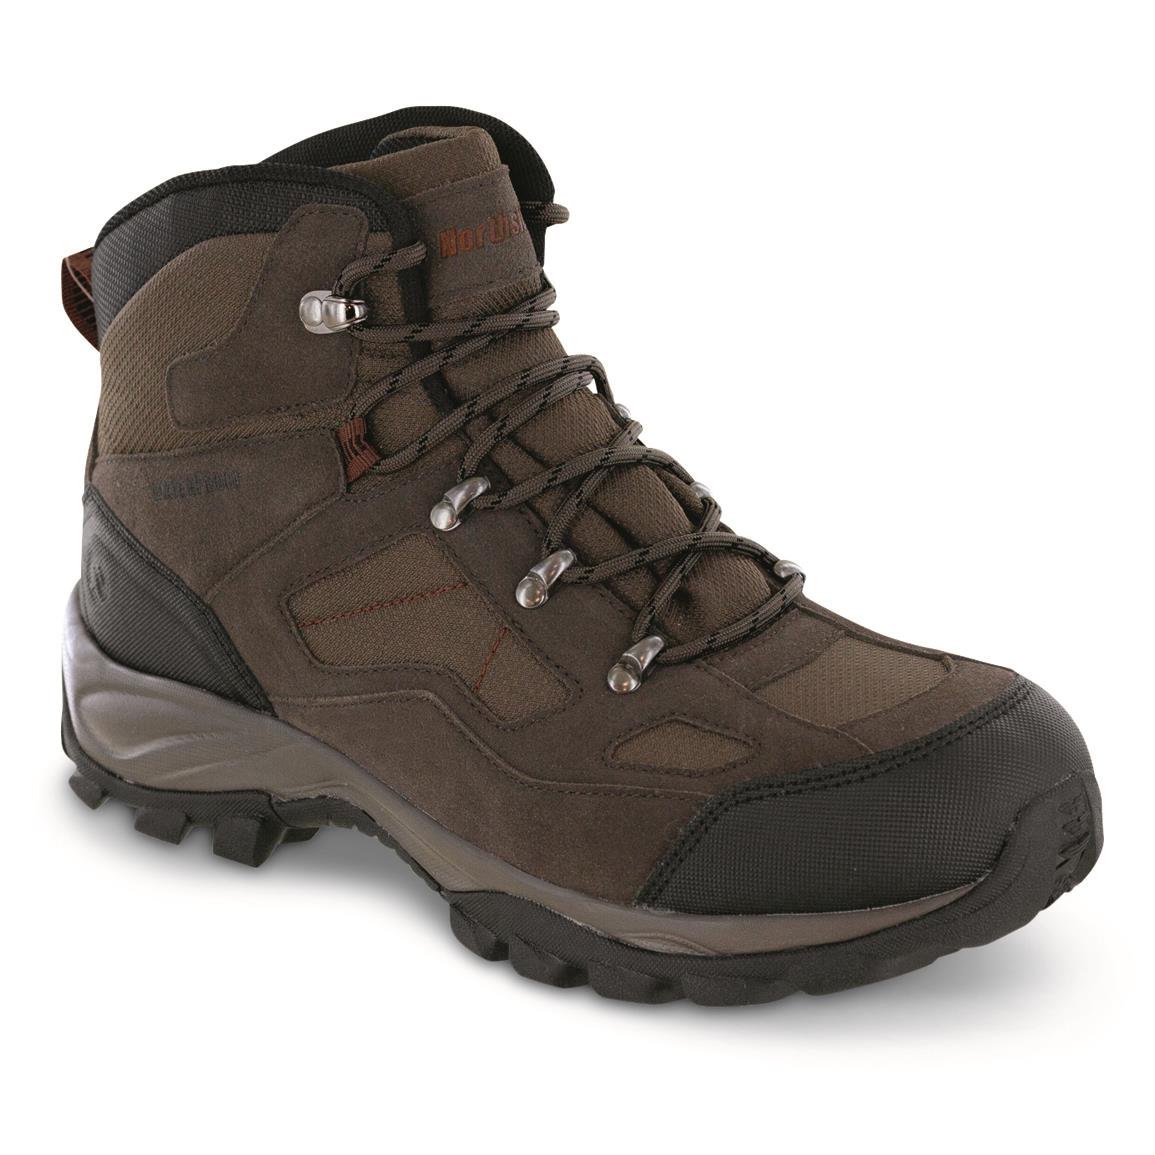 Northside Men's Ranger Mid Waterproof Hiking Boots, Dark Brown